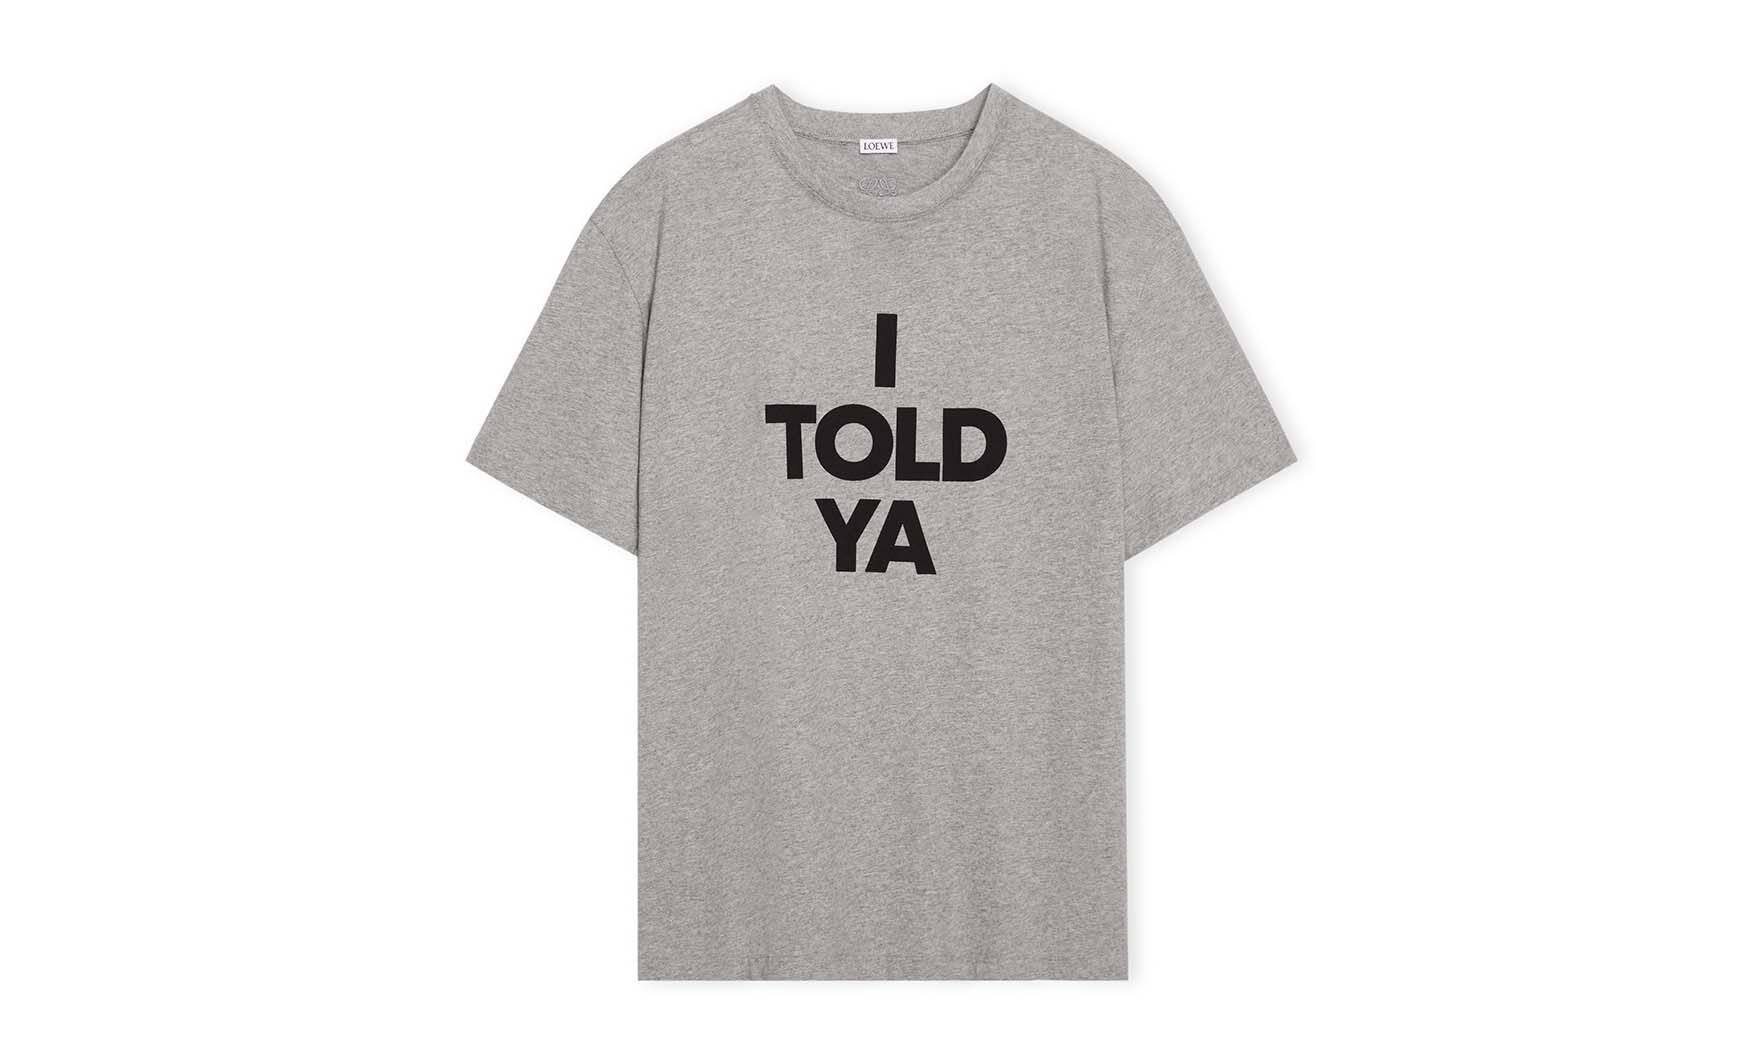 LOEWE、映画『チャレンジャーズ』に登場した「I TOLD YA」Tシャツ発売。スウェットシャツも